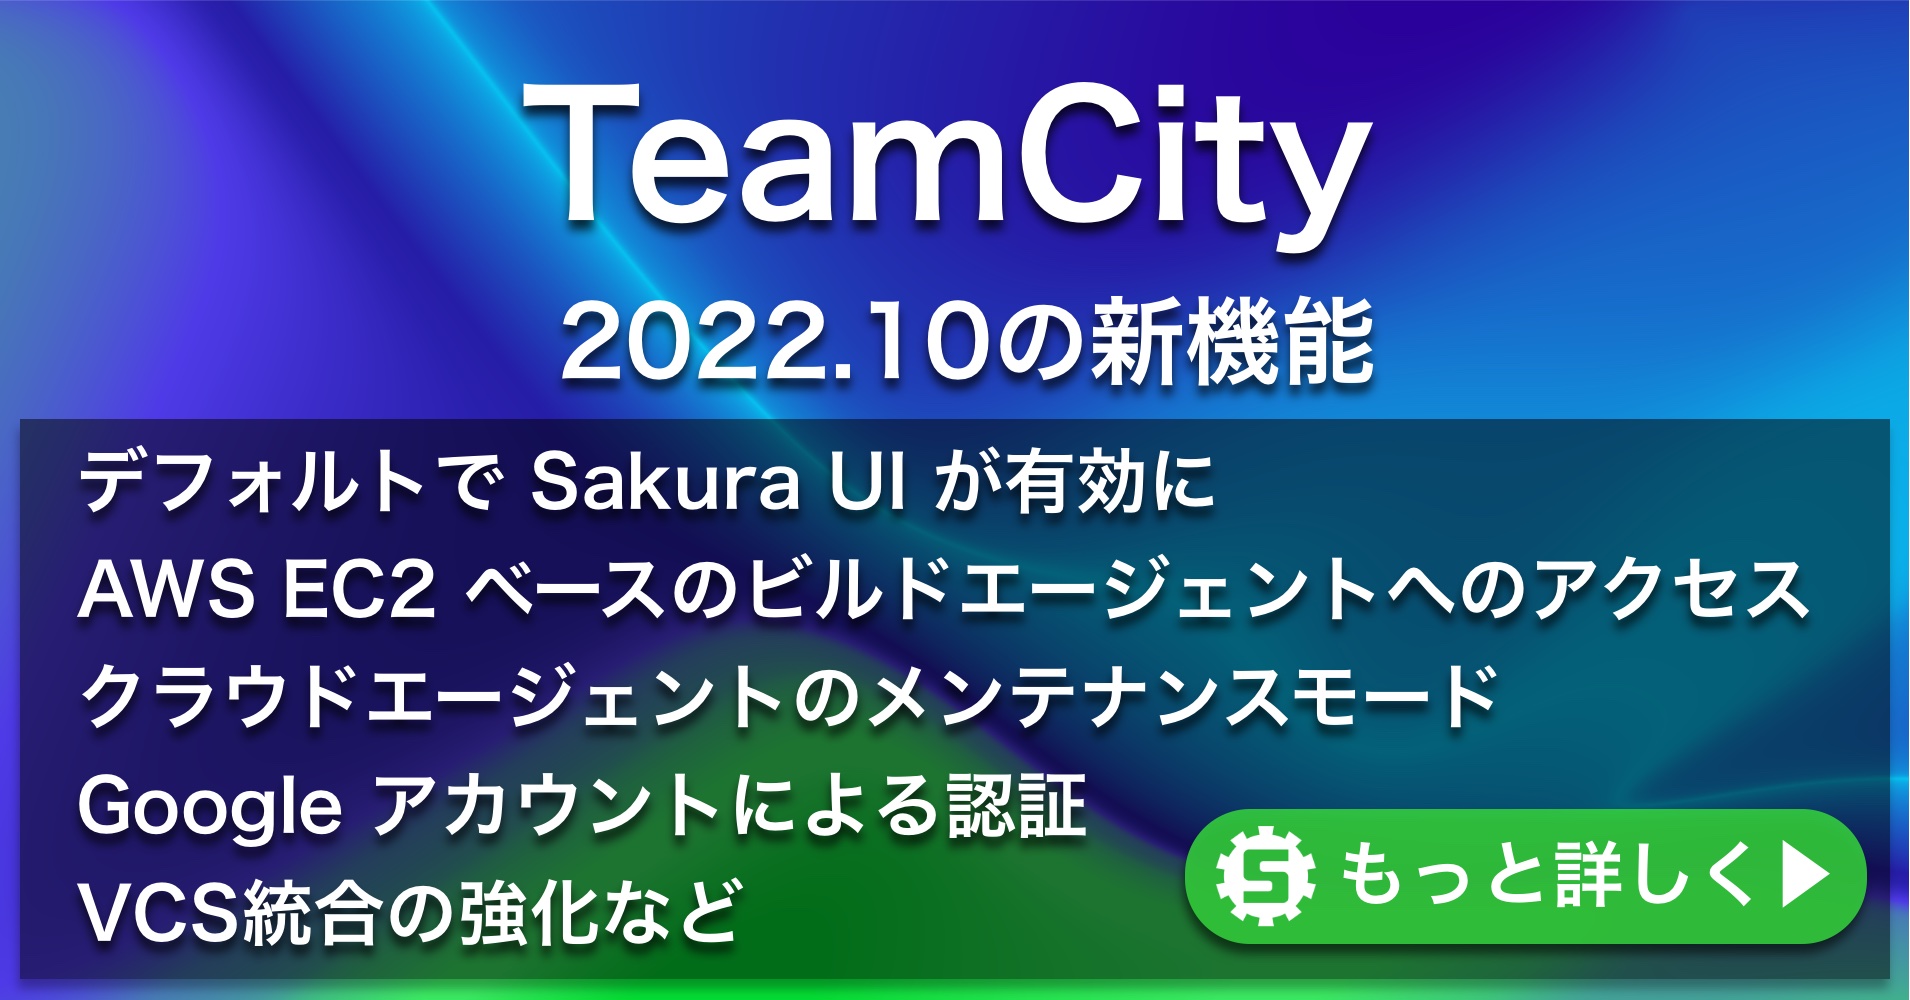 TeamCity 2022.10の新機能